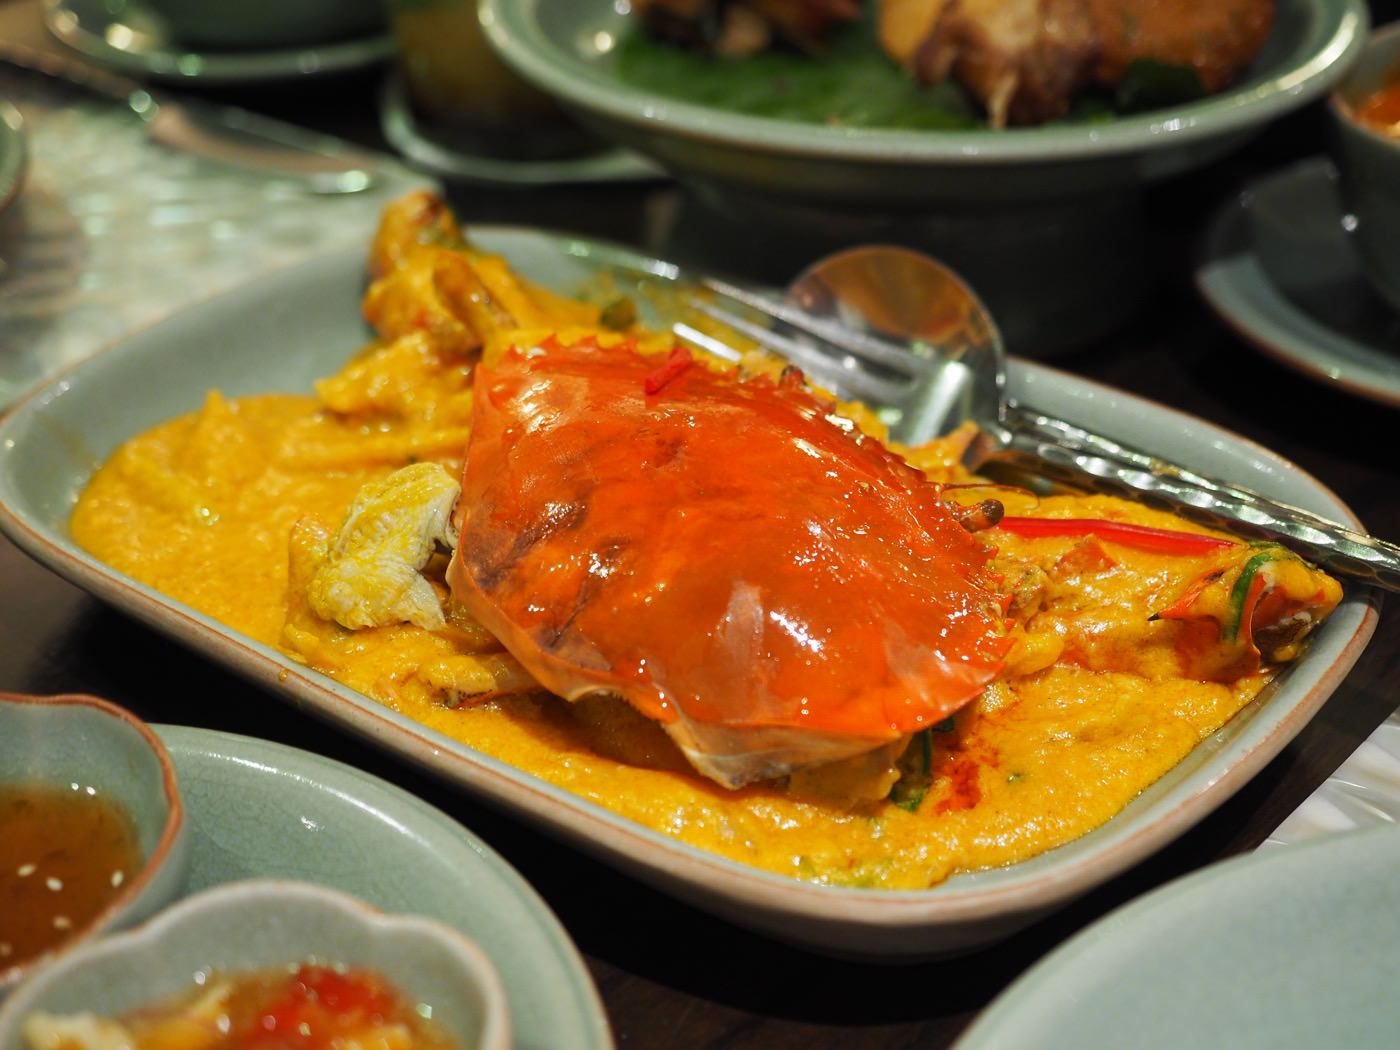 曼谷美食 Baan Khanitha Thai Cuisine Asiatique 三訪美味傳統泰菜 - 一口冒險 Bitesized Adventure